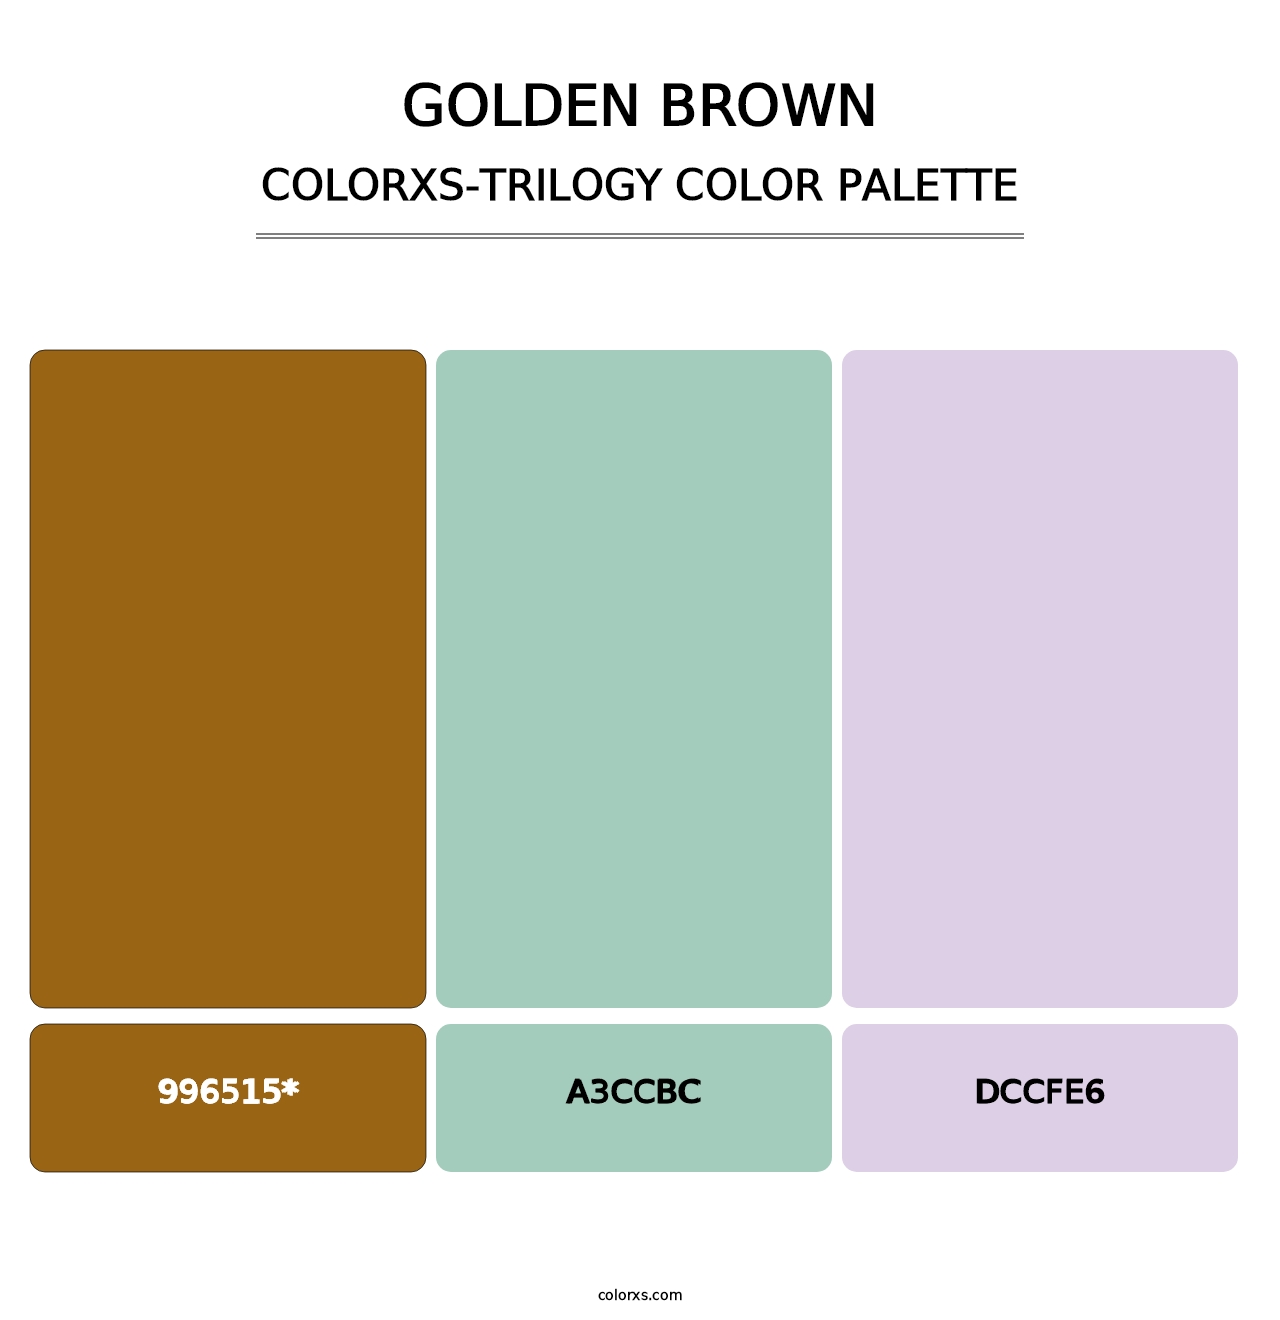 Golden brown - Colorxs Trilogy Palette